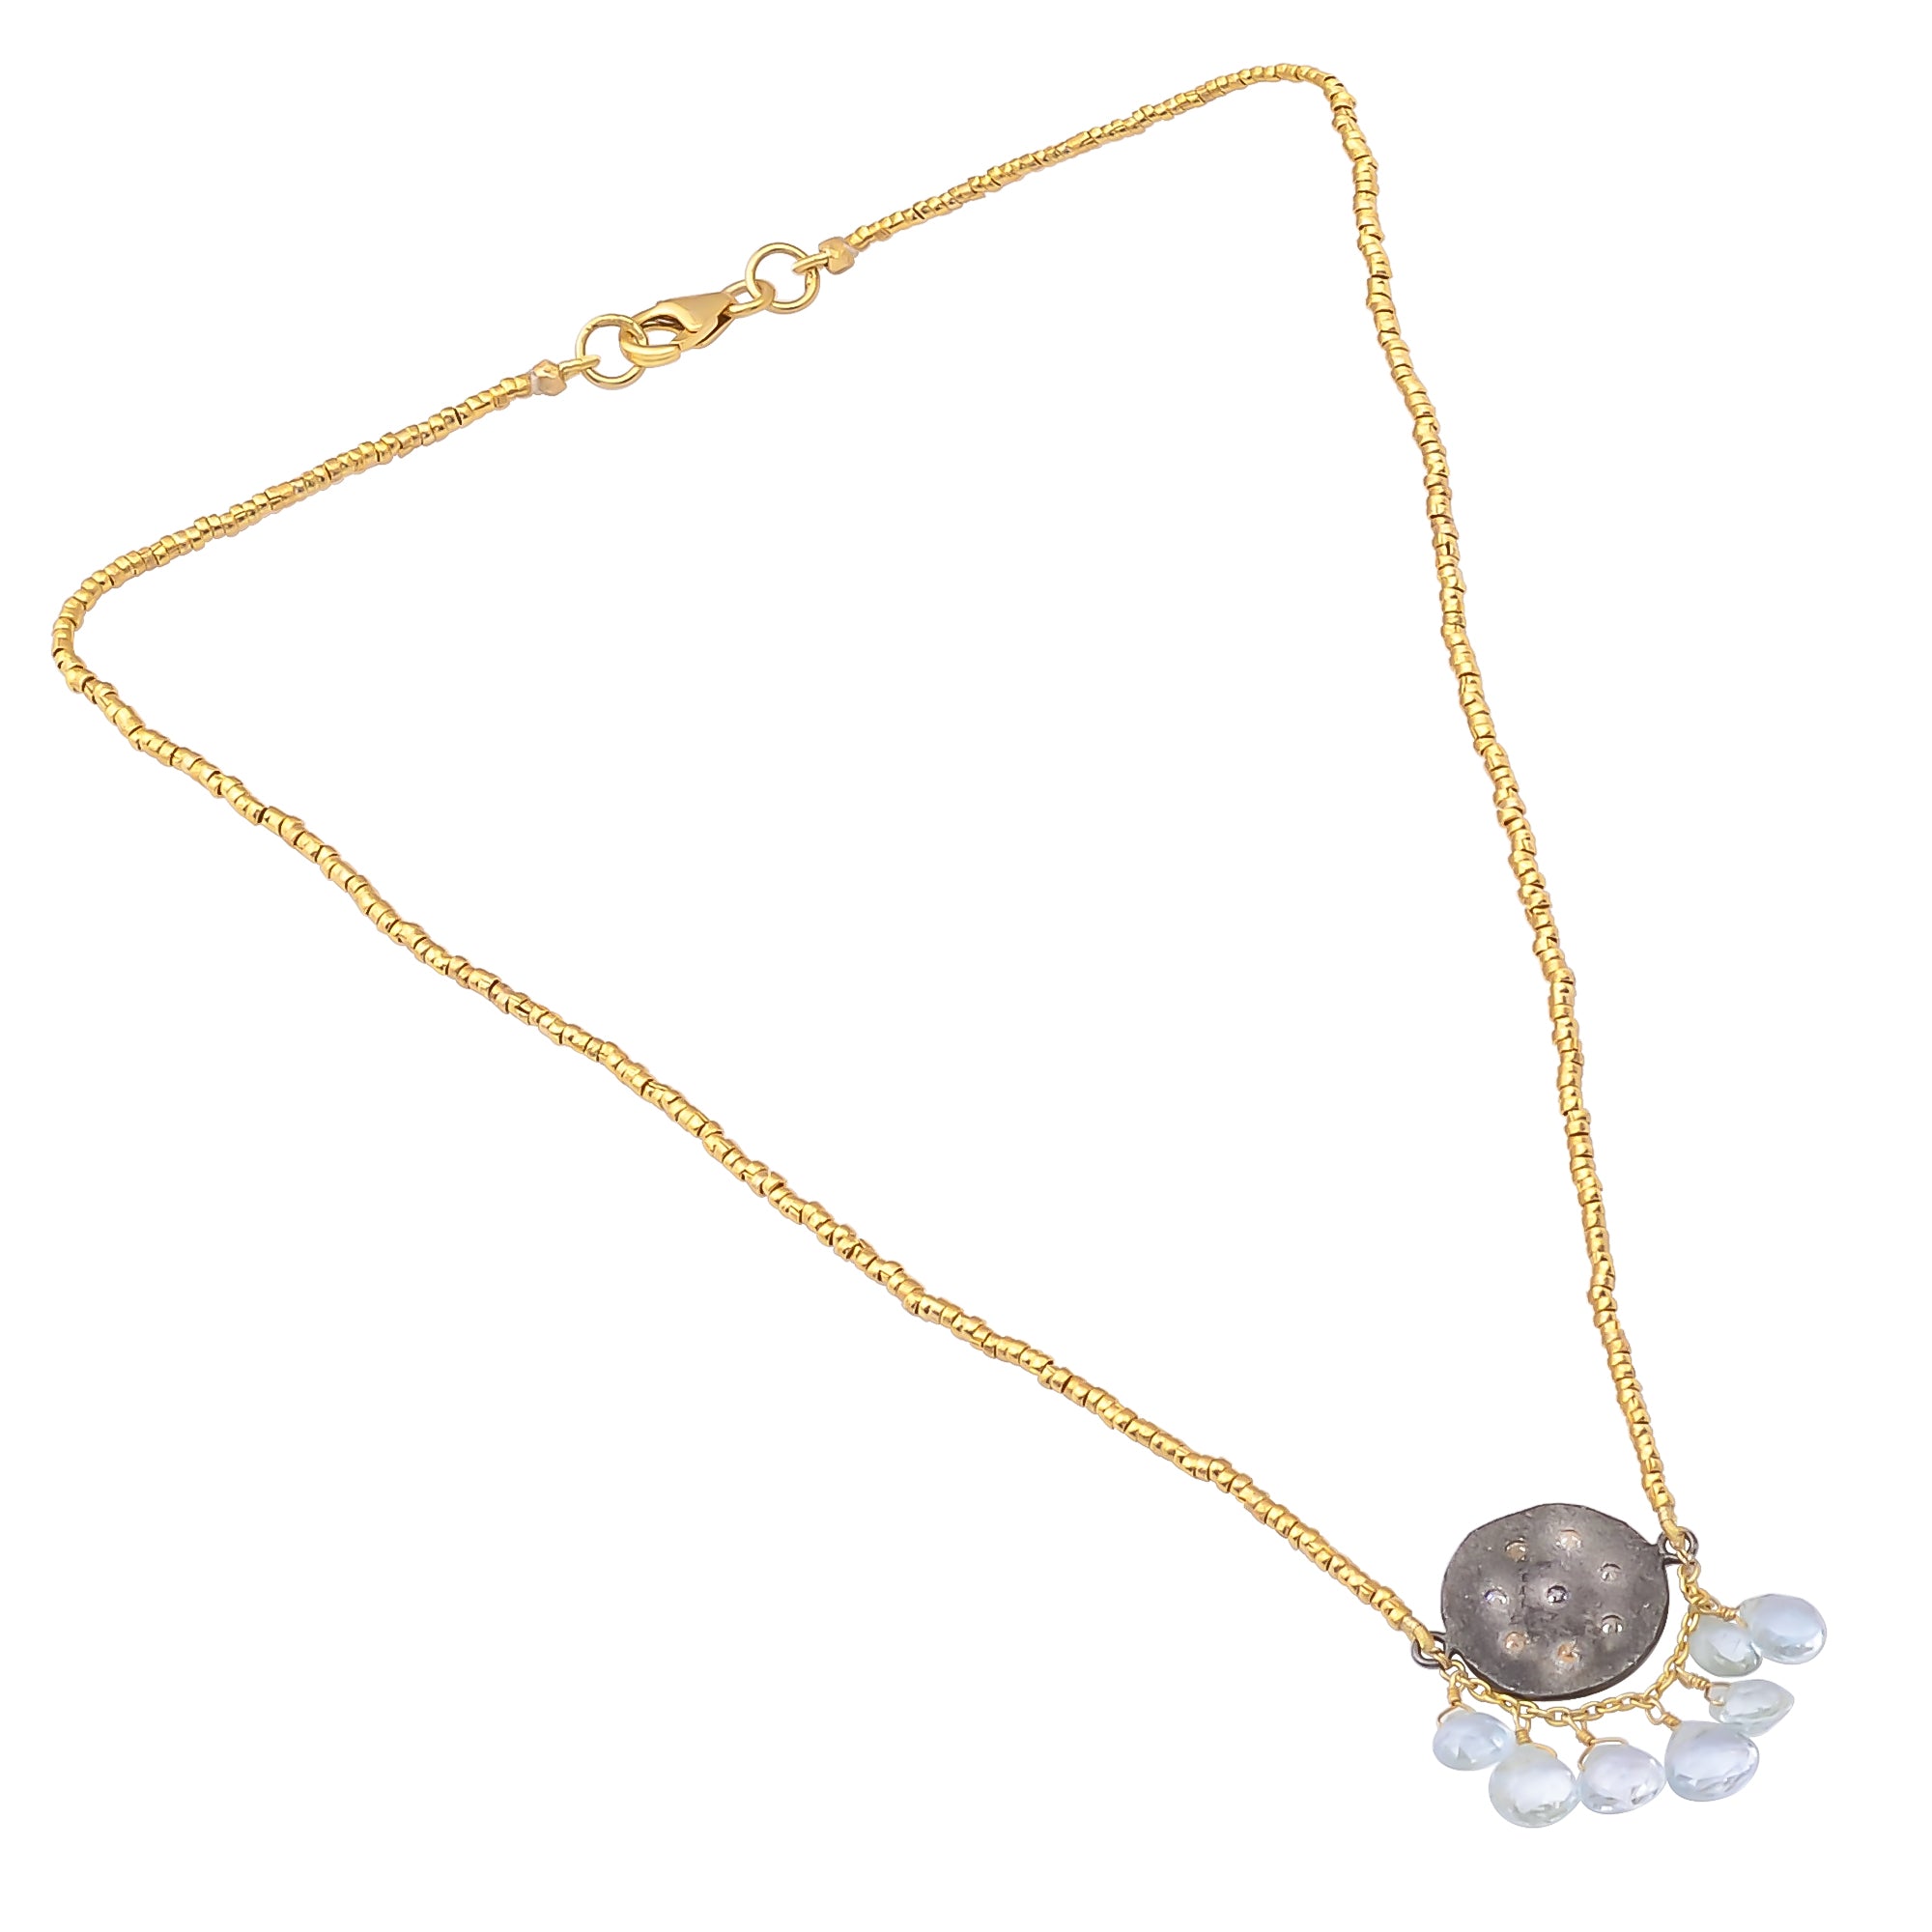 Buy Handmade Silver Gold Plated Zircon/aquamarine Pendant Necklace